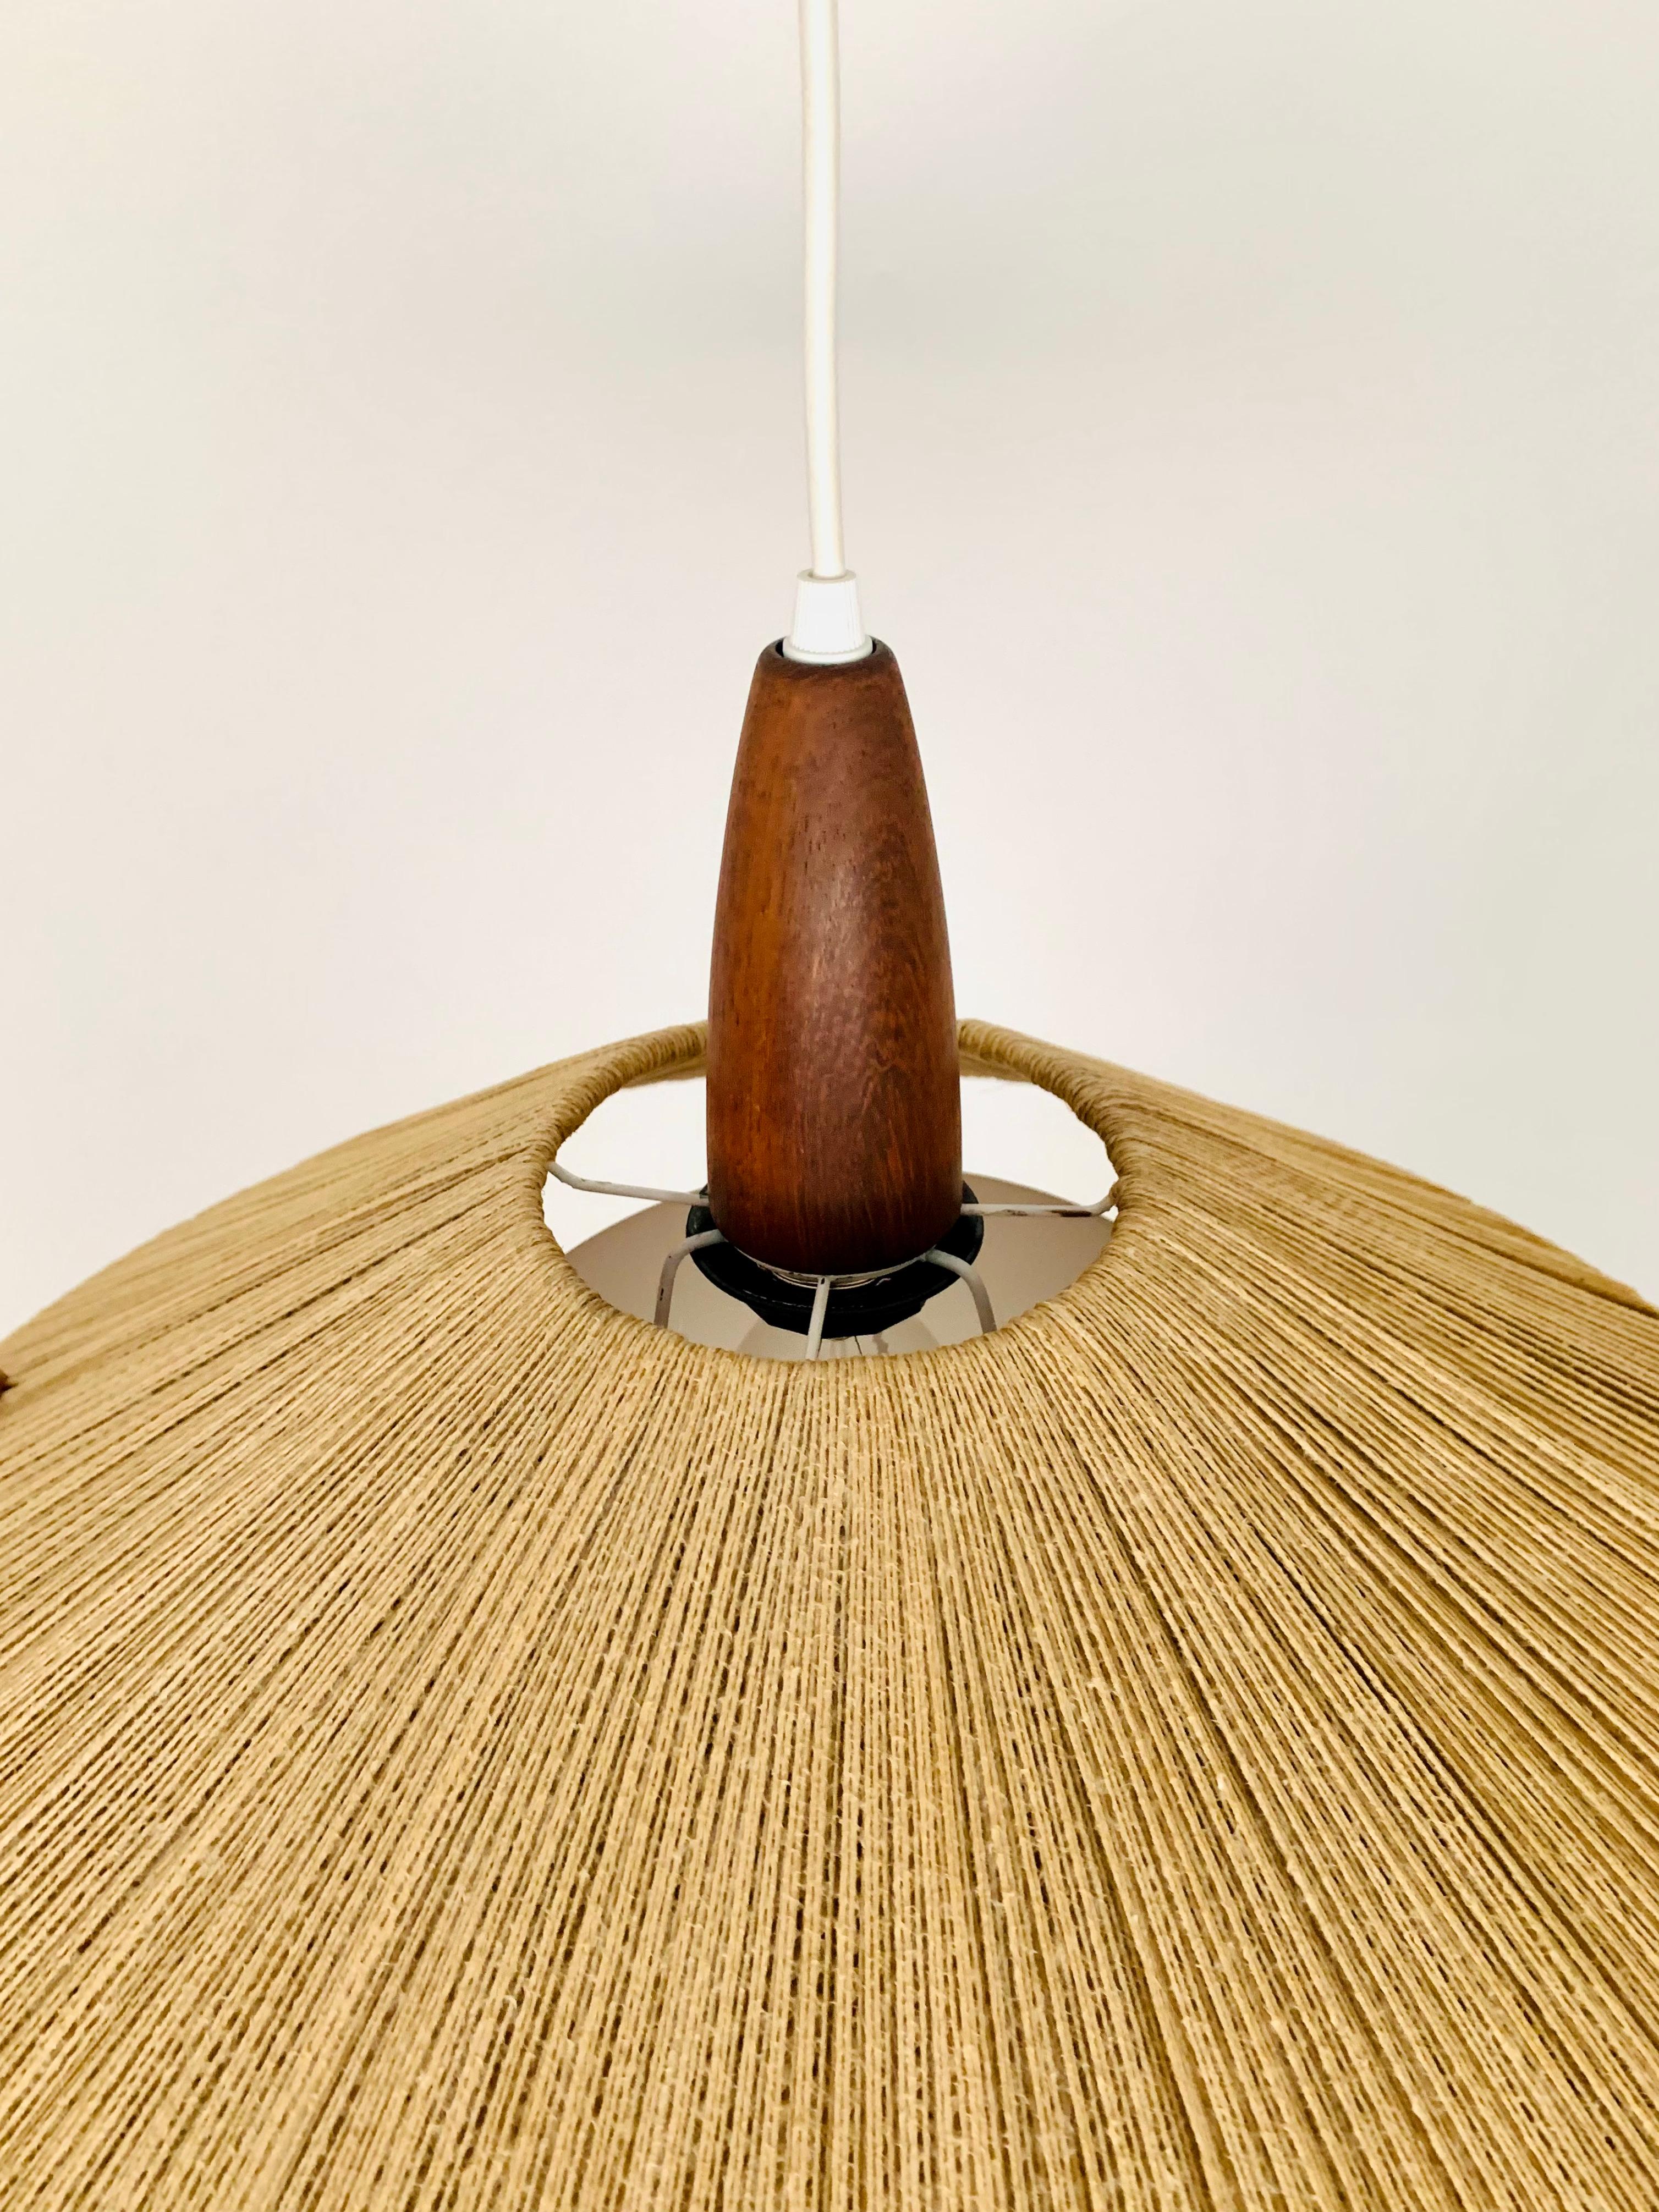 Raffia Sisal and Teak Pendant Lamp from Temde For Sale